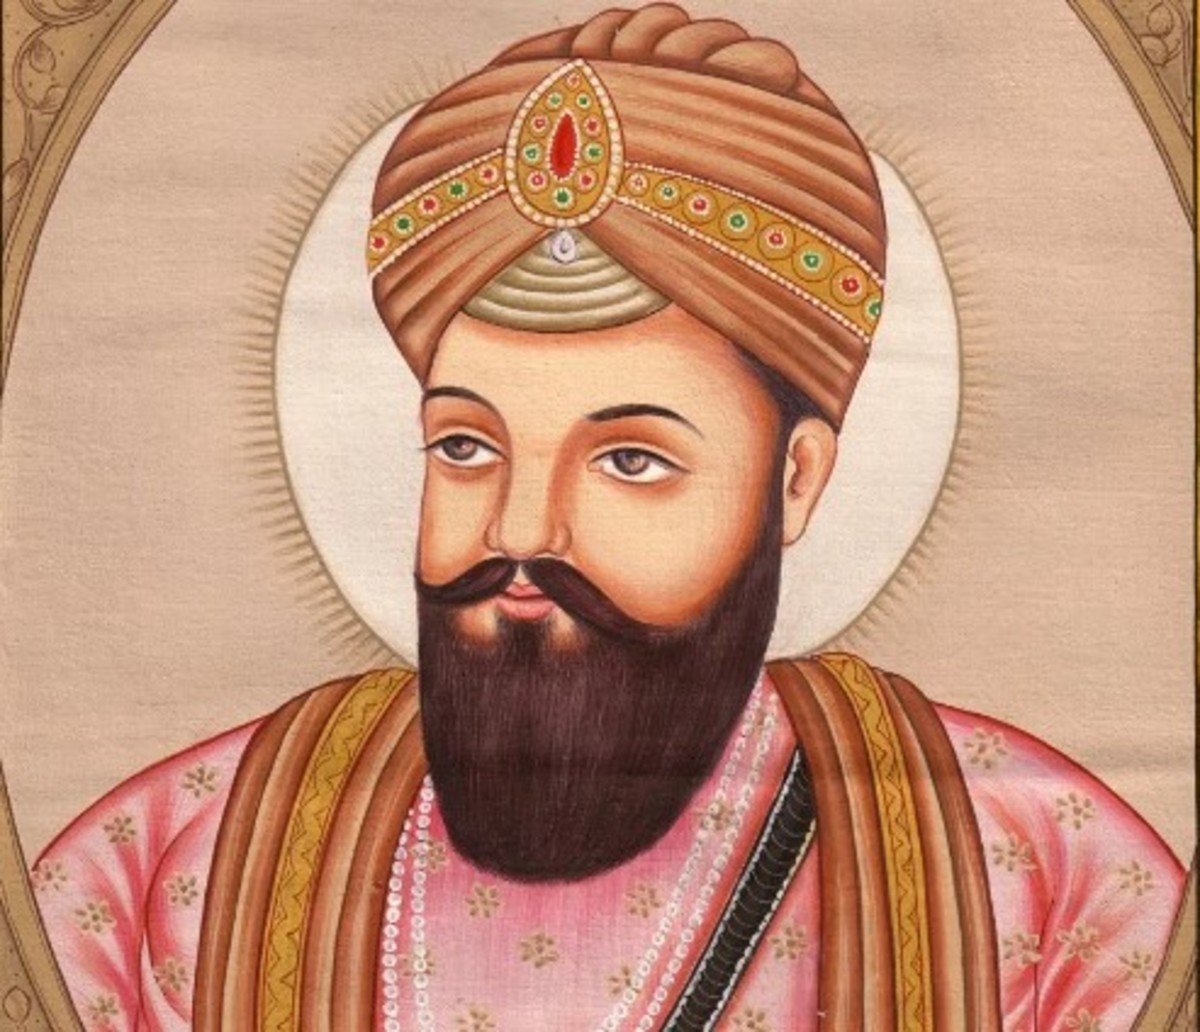 Guru Har Rai Ji: The Seventh Guru of the Sikhs